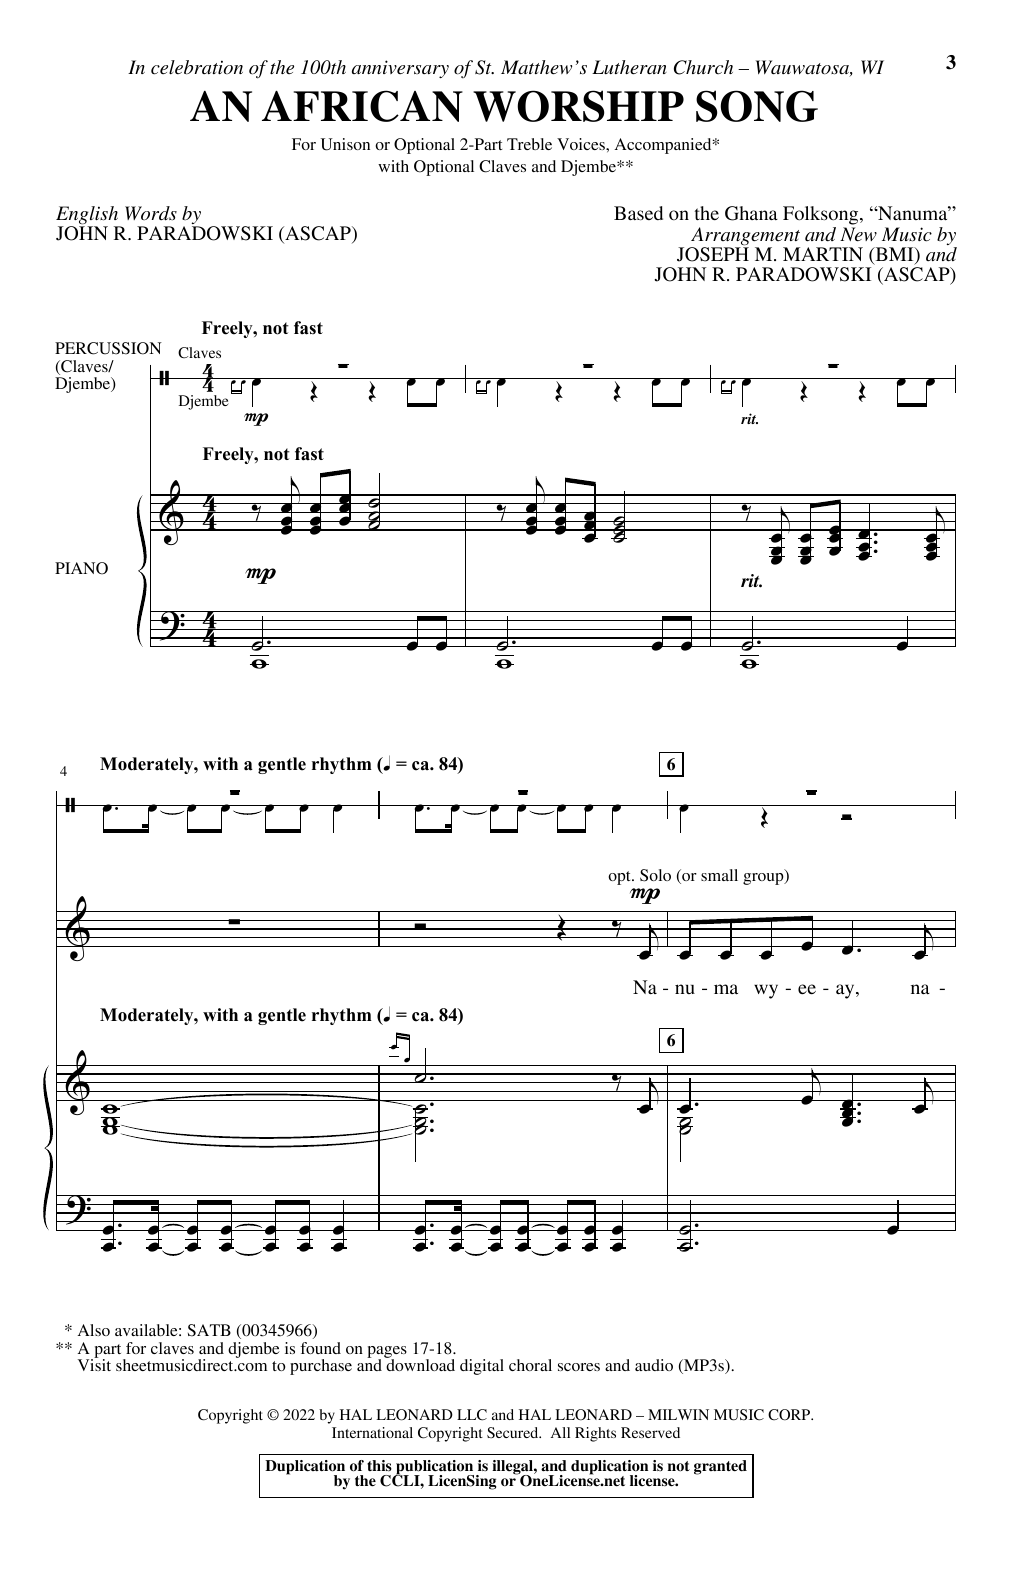 Joseph M. Martin and John R. Paradowski An African Worship Song Sheet Music Notes & Chords for 2-Part Choir - Download or Print PDF